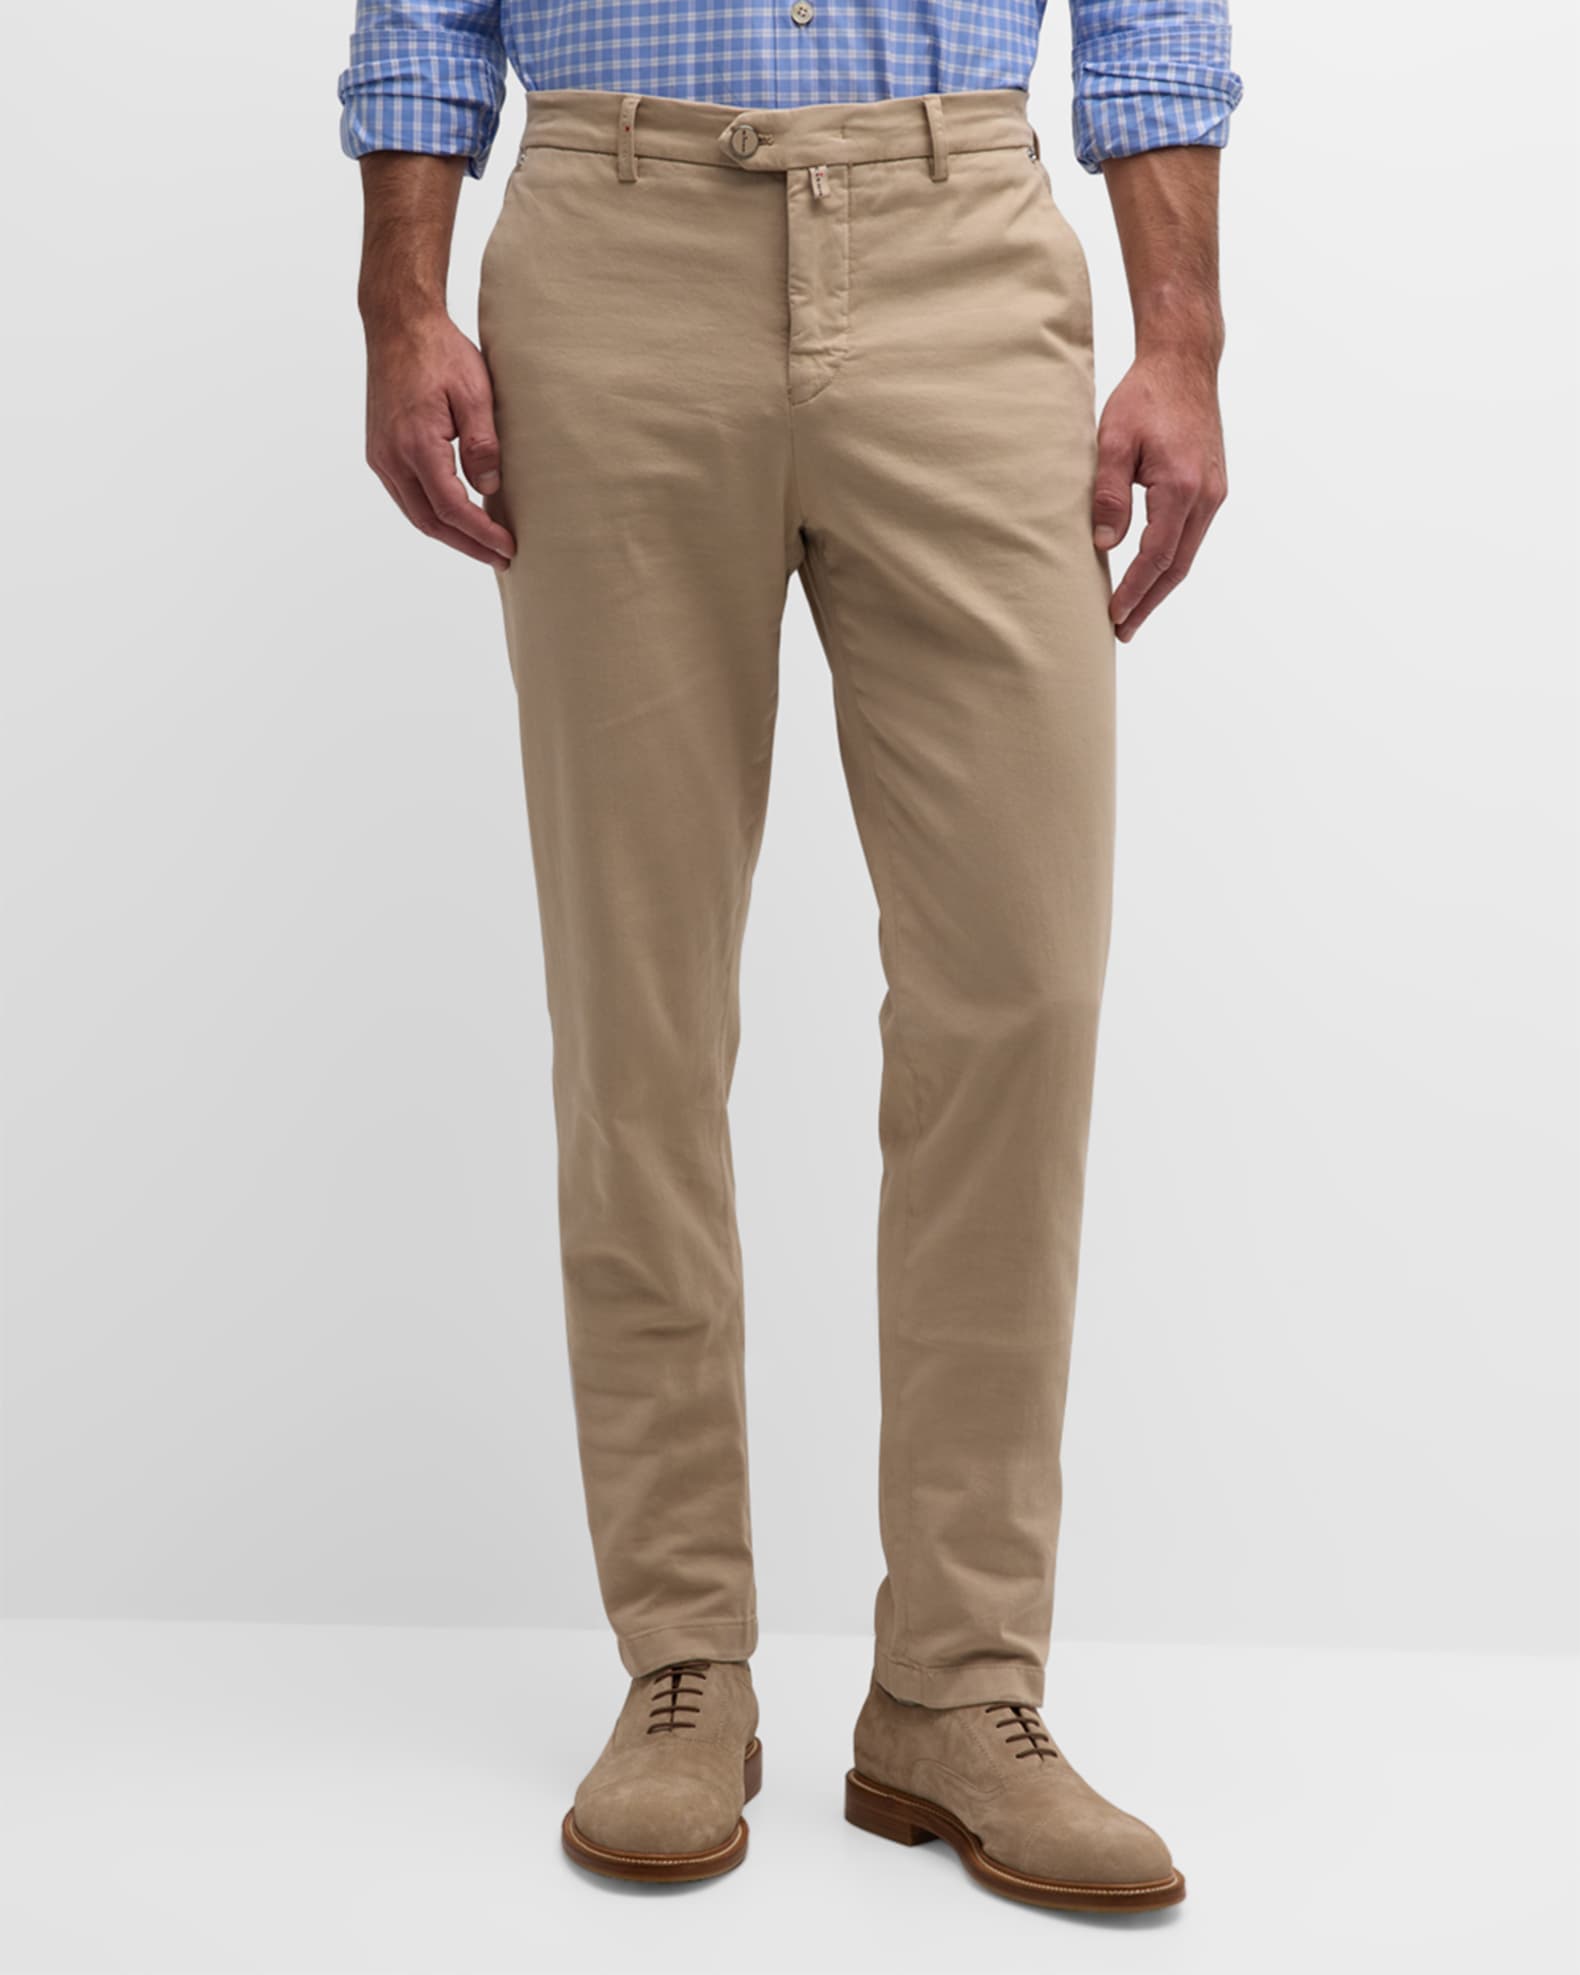 Louis Vuitton Chino Pants Beige. Size 40